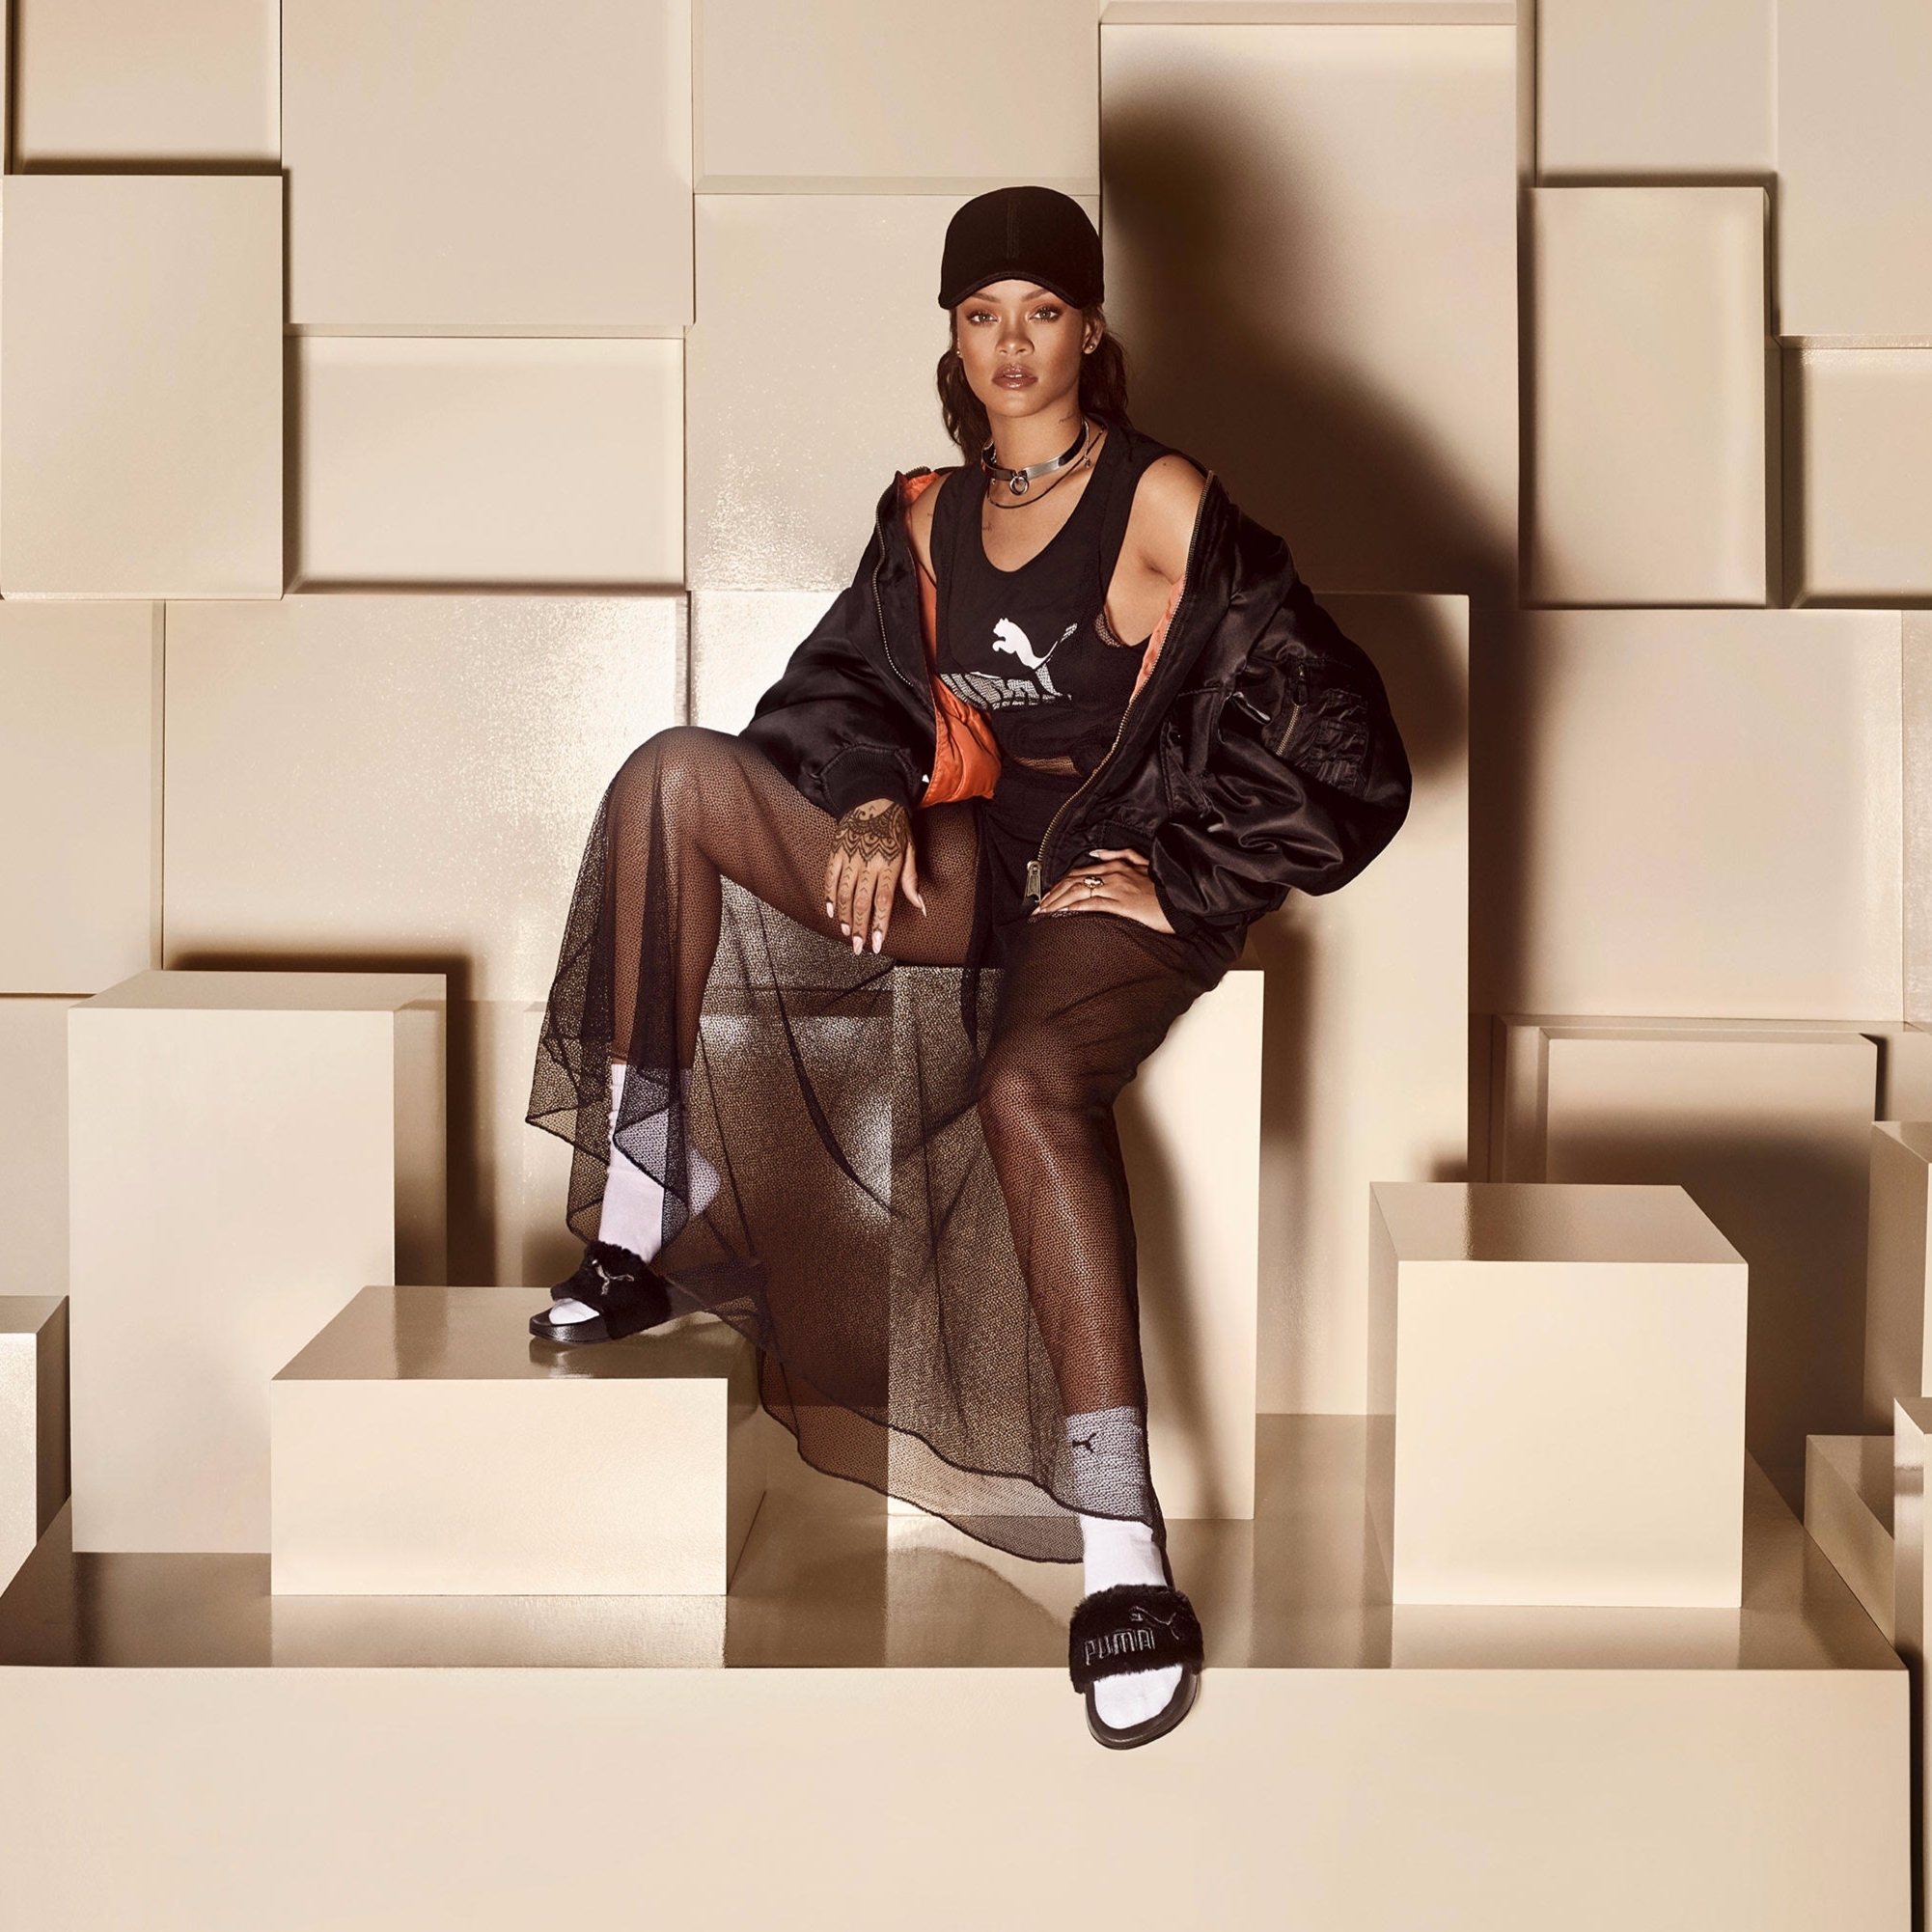 【 PUMA X FENTY 】奢華毛絨拖鞋！The Fur Slide by Rihanna 鉚釘灰型格新色 8/5 限量登台發售